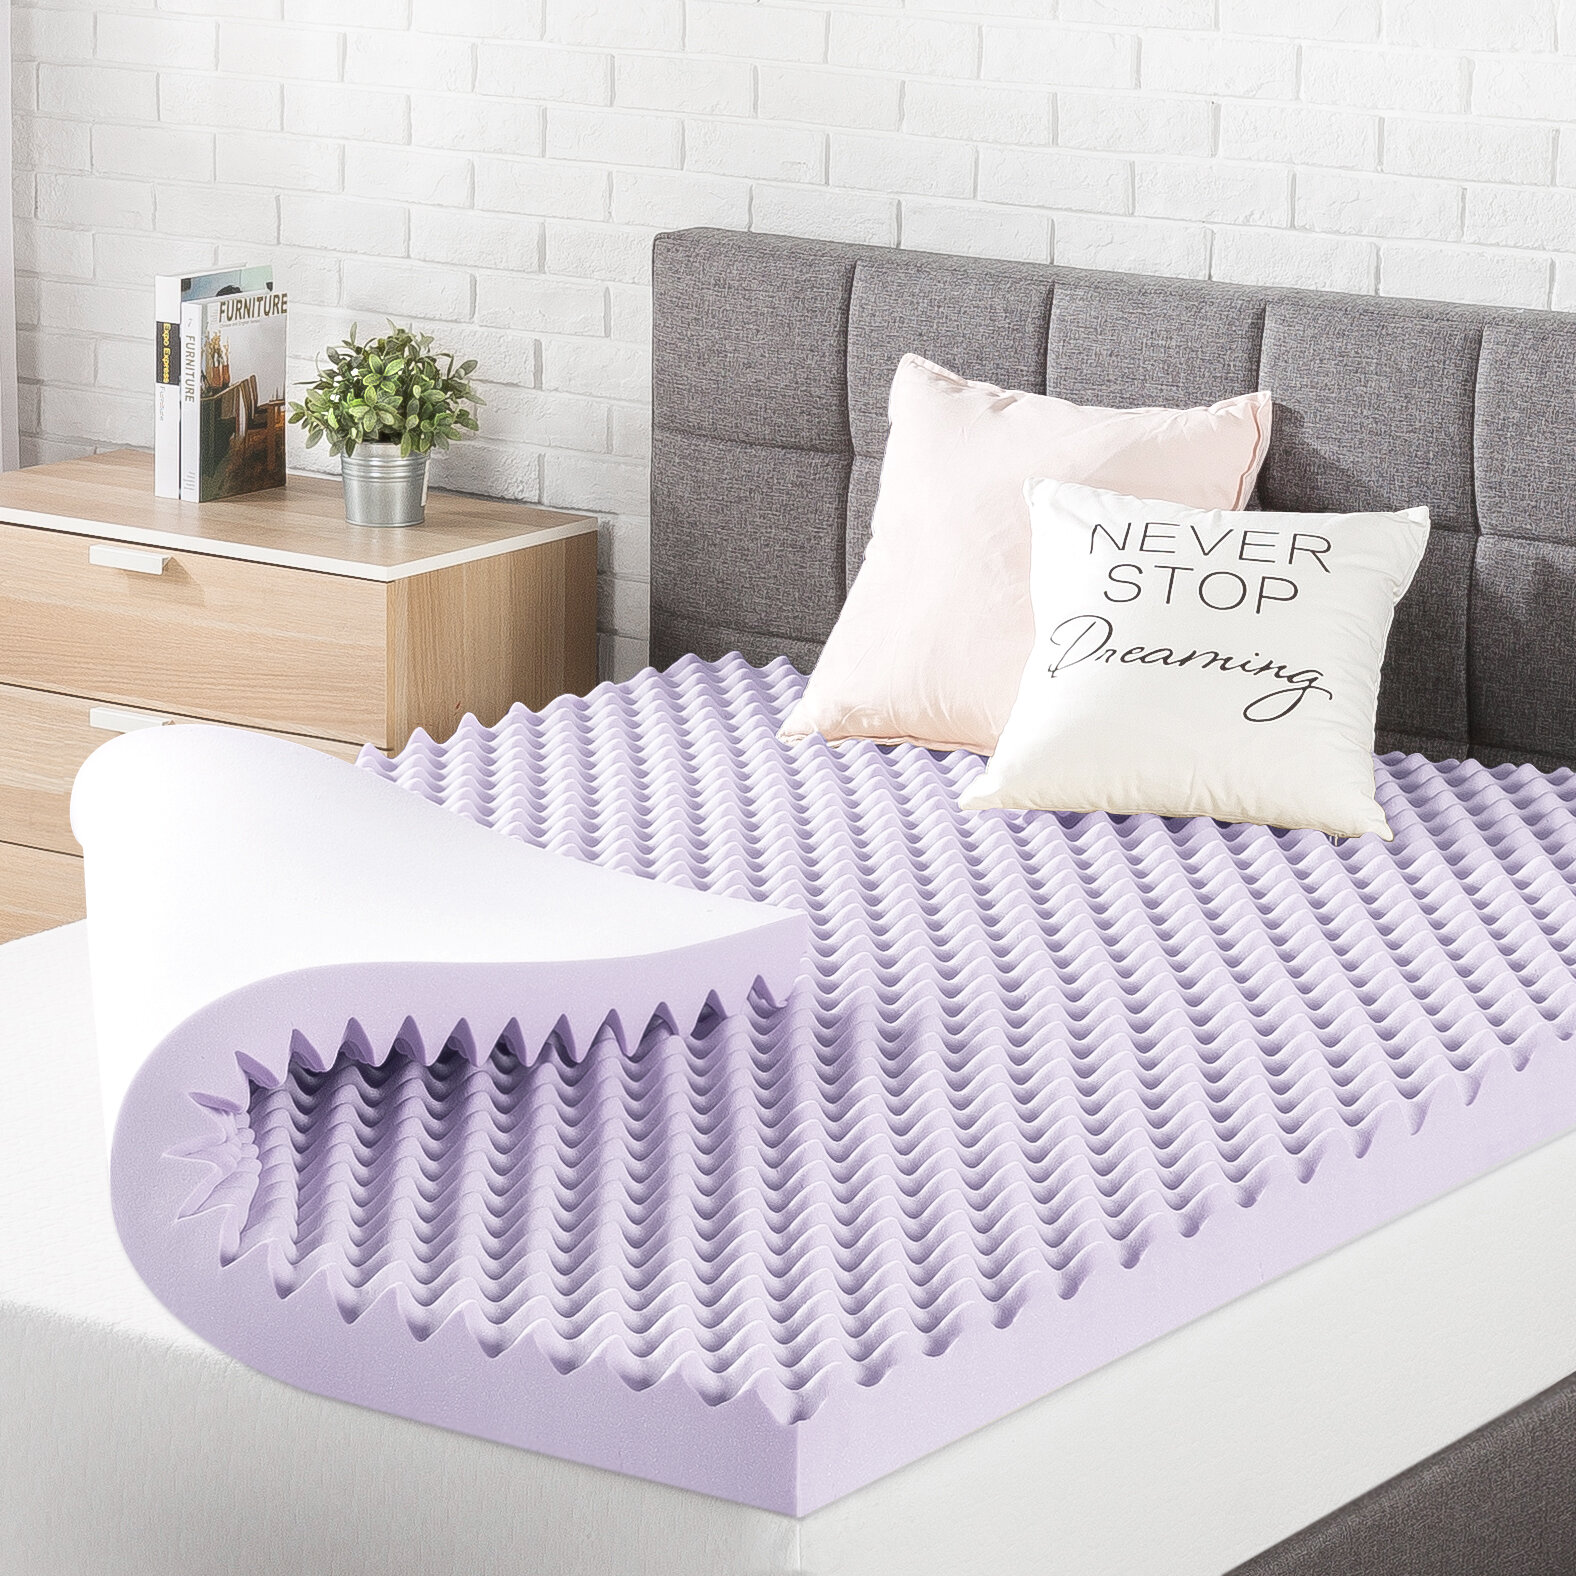 LUCID 2 Inch 5 Zone Lavender Memory Foam Mattress Topper – Calming